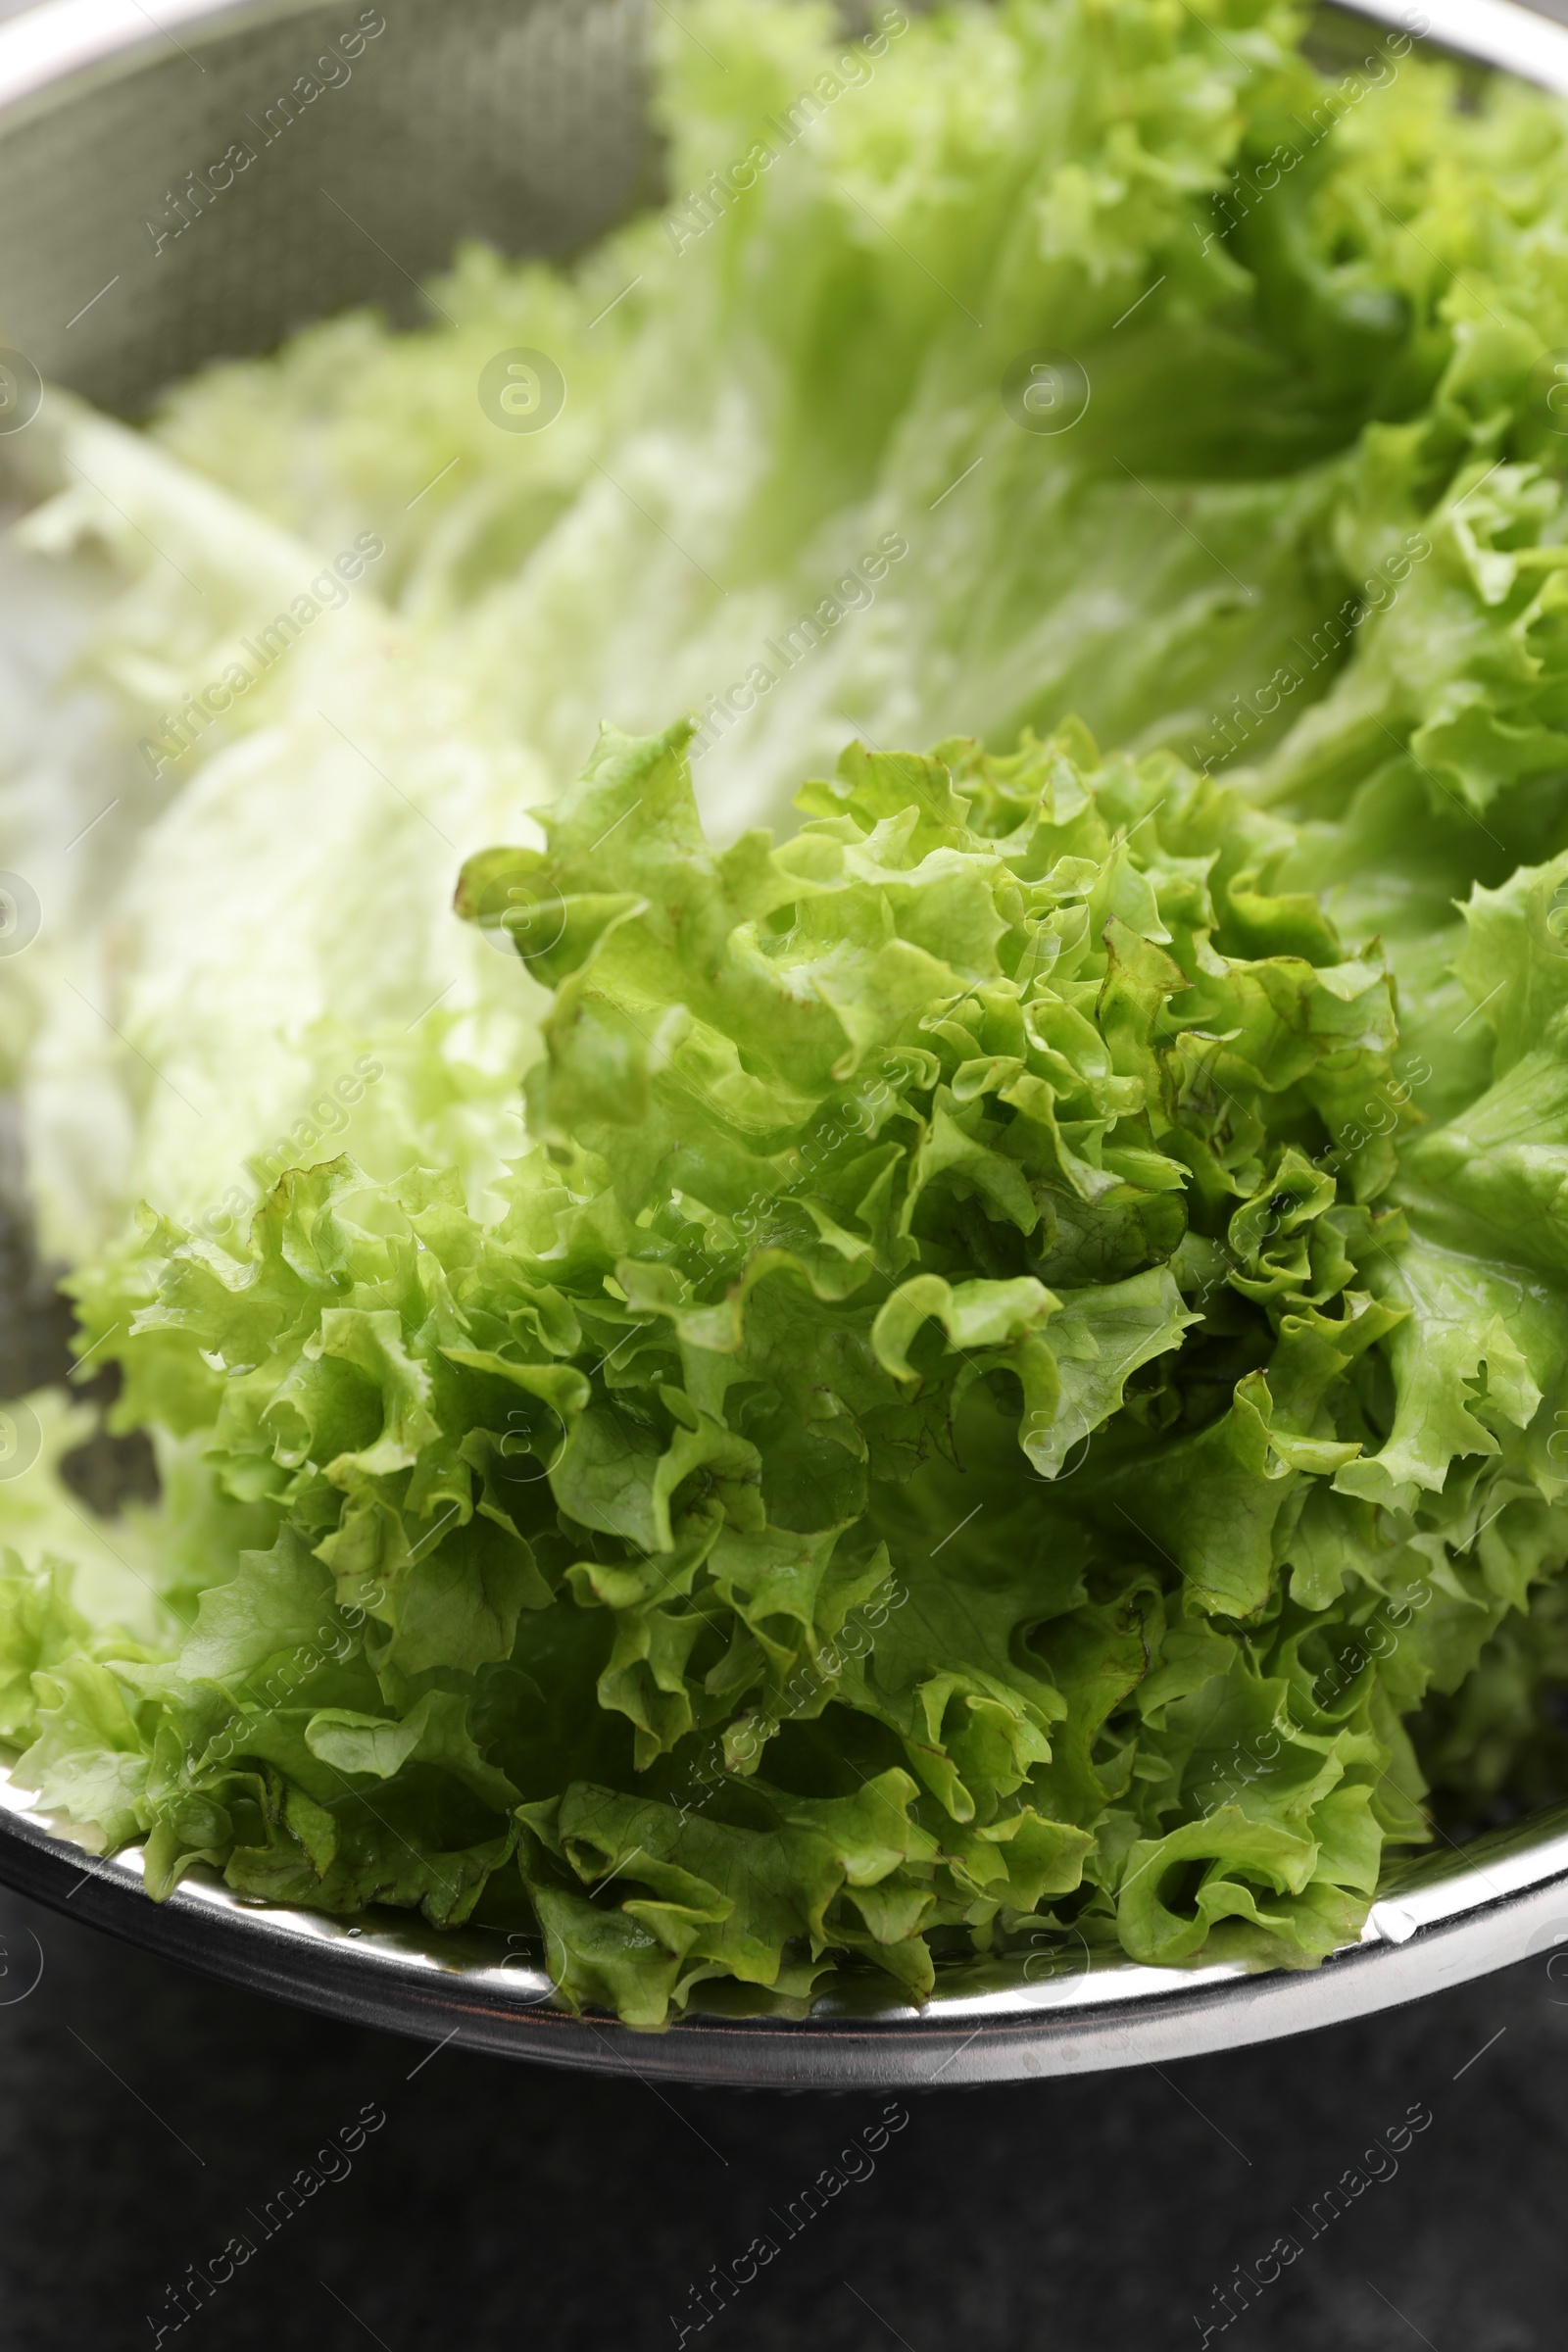 Photo of Fresh lettuce on stone table, closeup. Salad greens